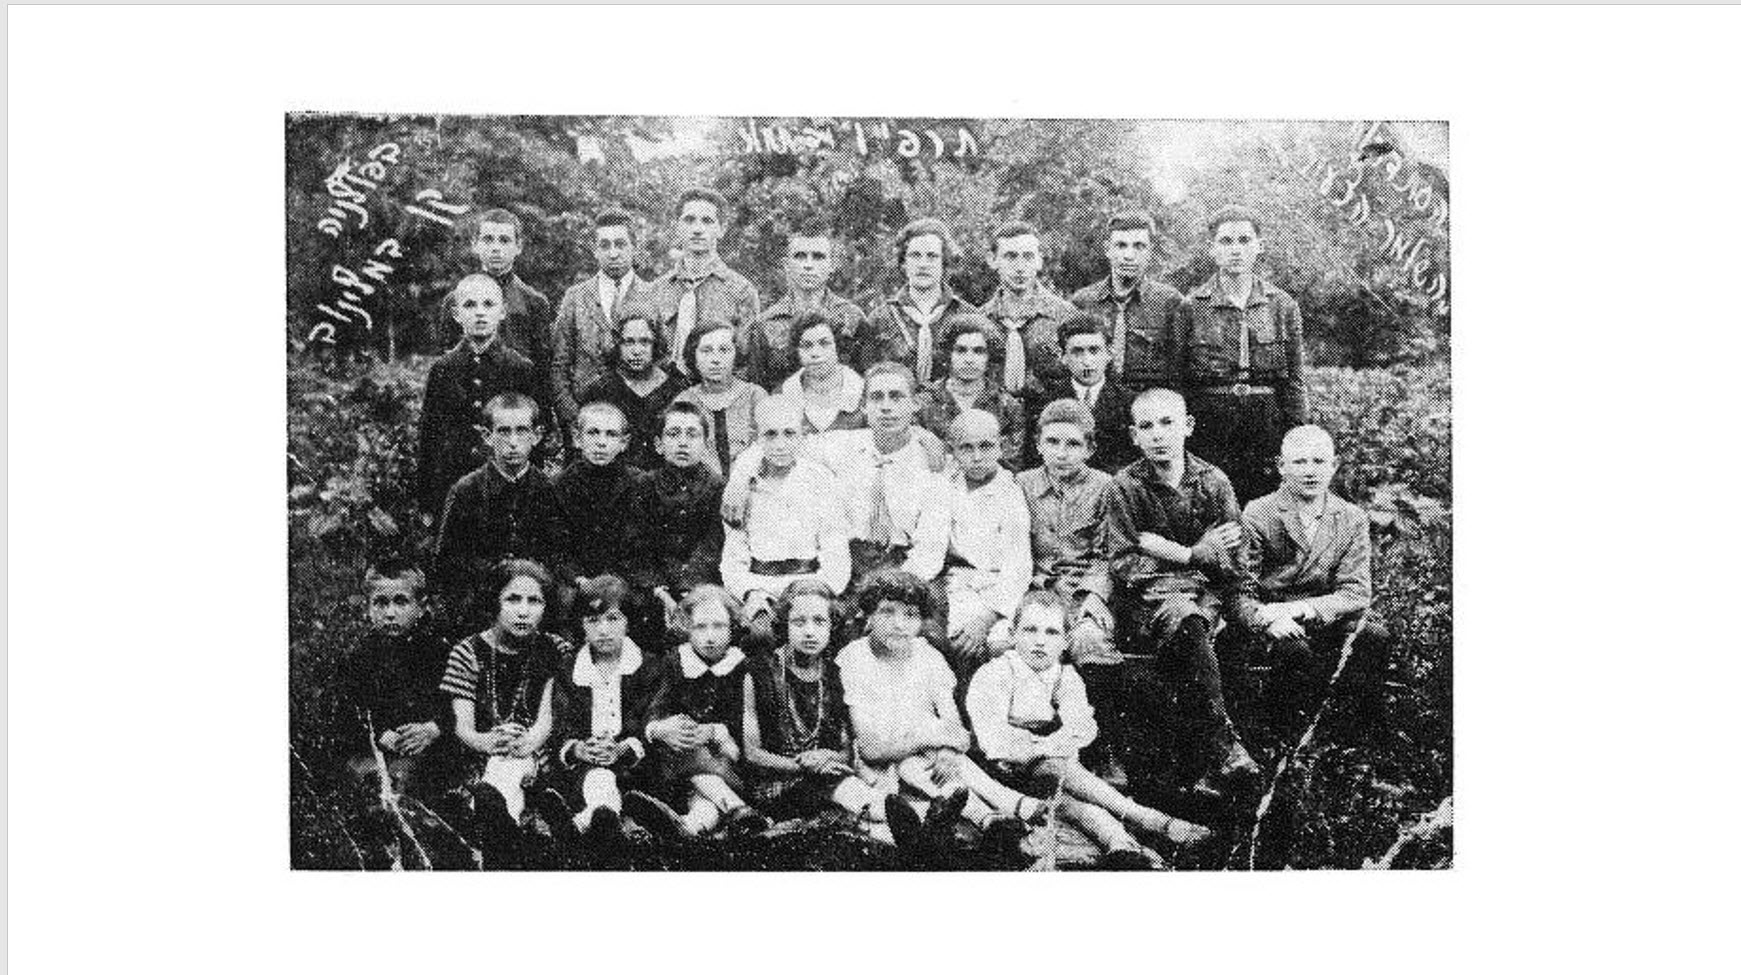 The Mohel family in Mlinov 1928-1929